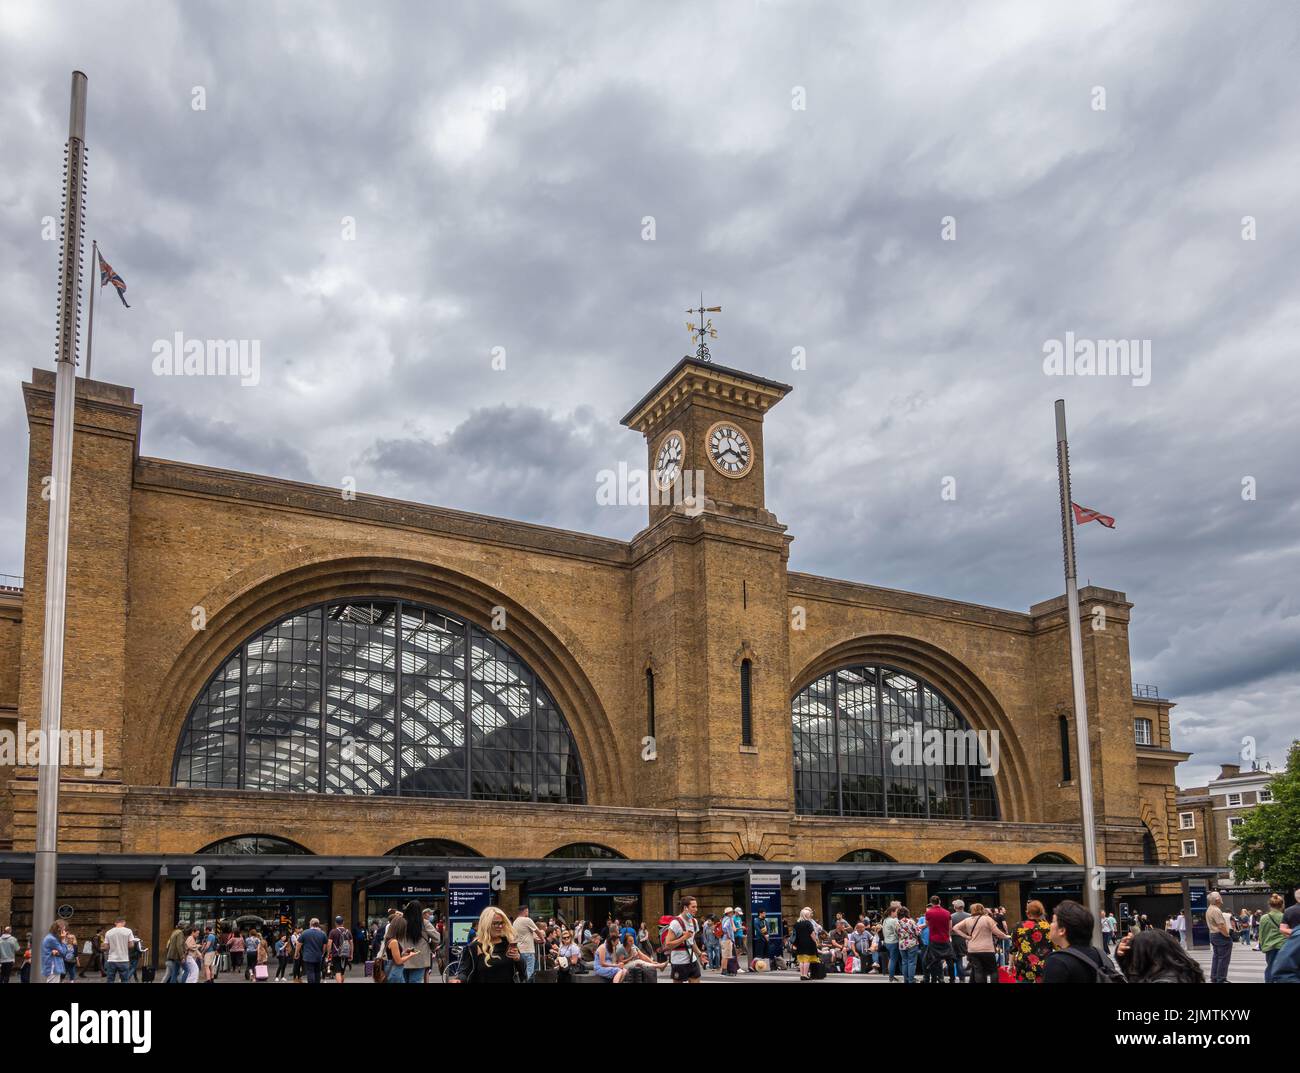 London, Great Britain - July 3, 2022: Closeup, Yellow brick King's Cross railway station with clock tower separating 2 wings under dark gray cloudscap Stock Photo